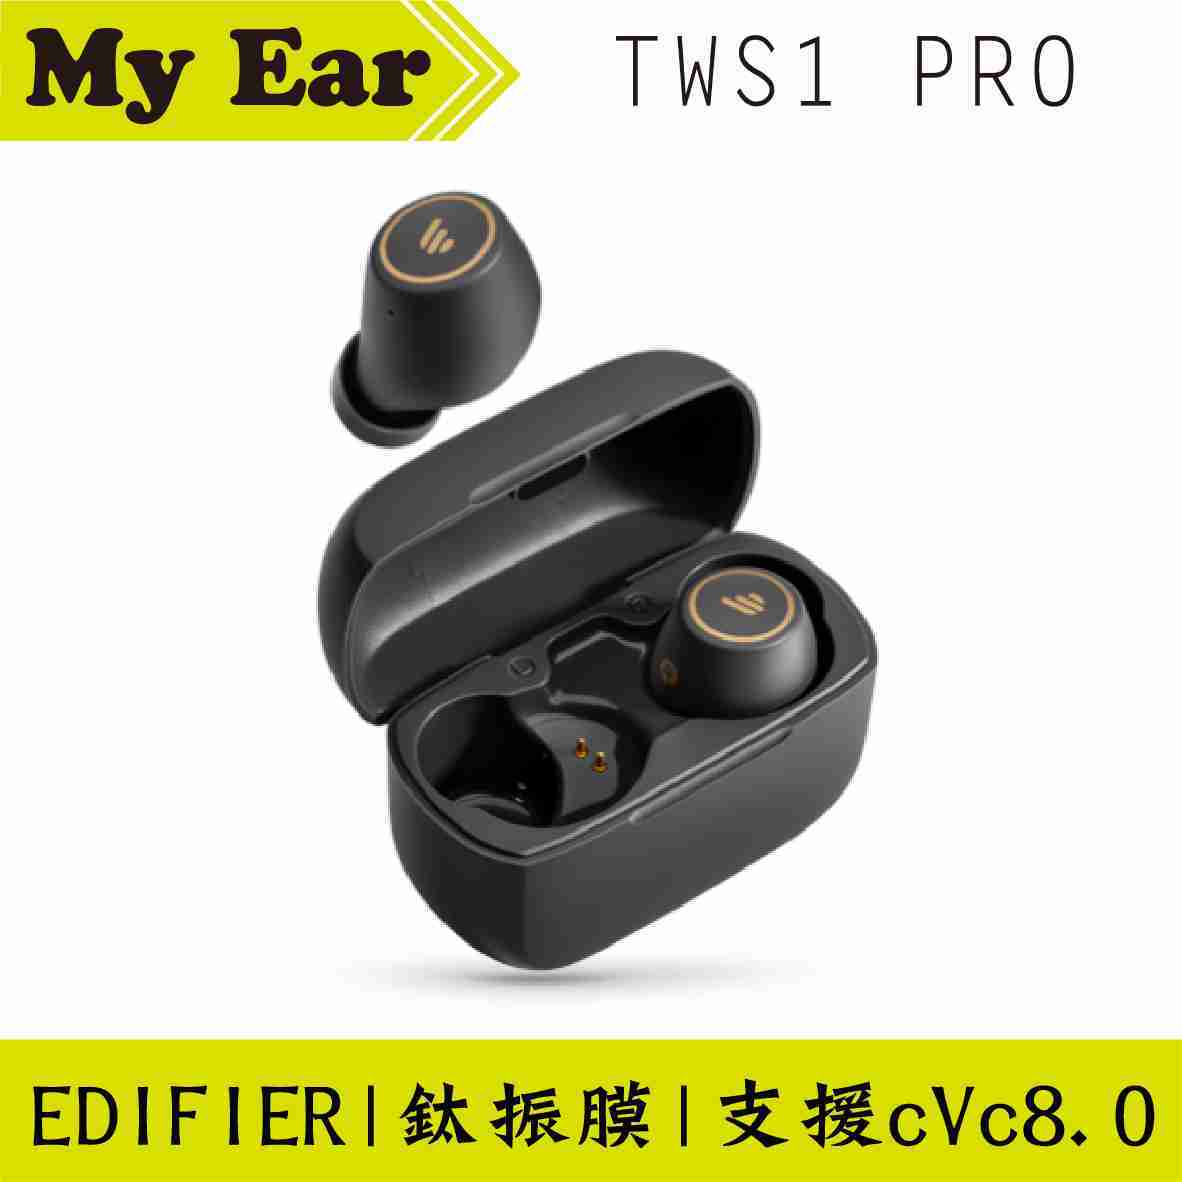 EDIFIER 漫步者 TWS1 pro 深灰 IP65 防水 通話降噪 藍芽 耳機 | My Ear 耳機專門店